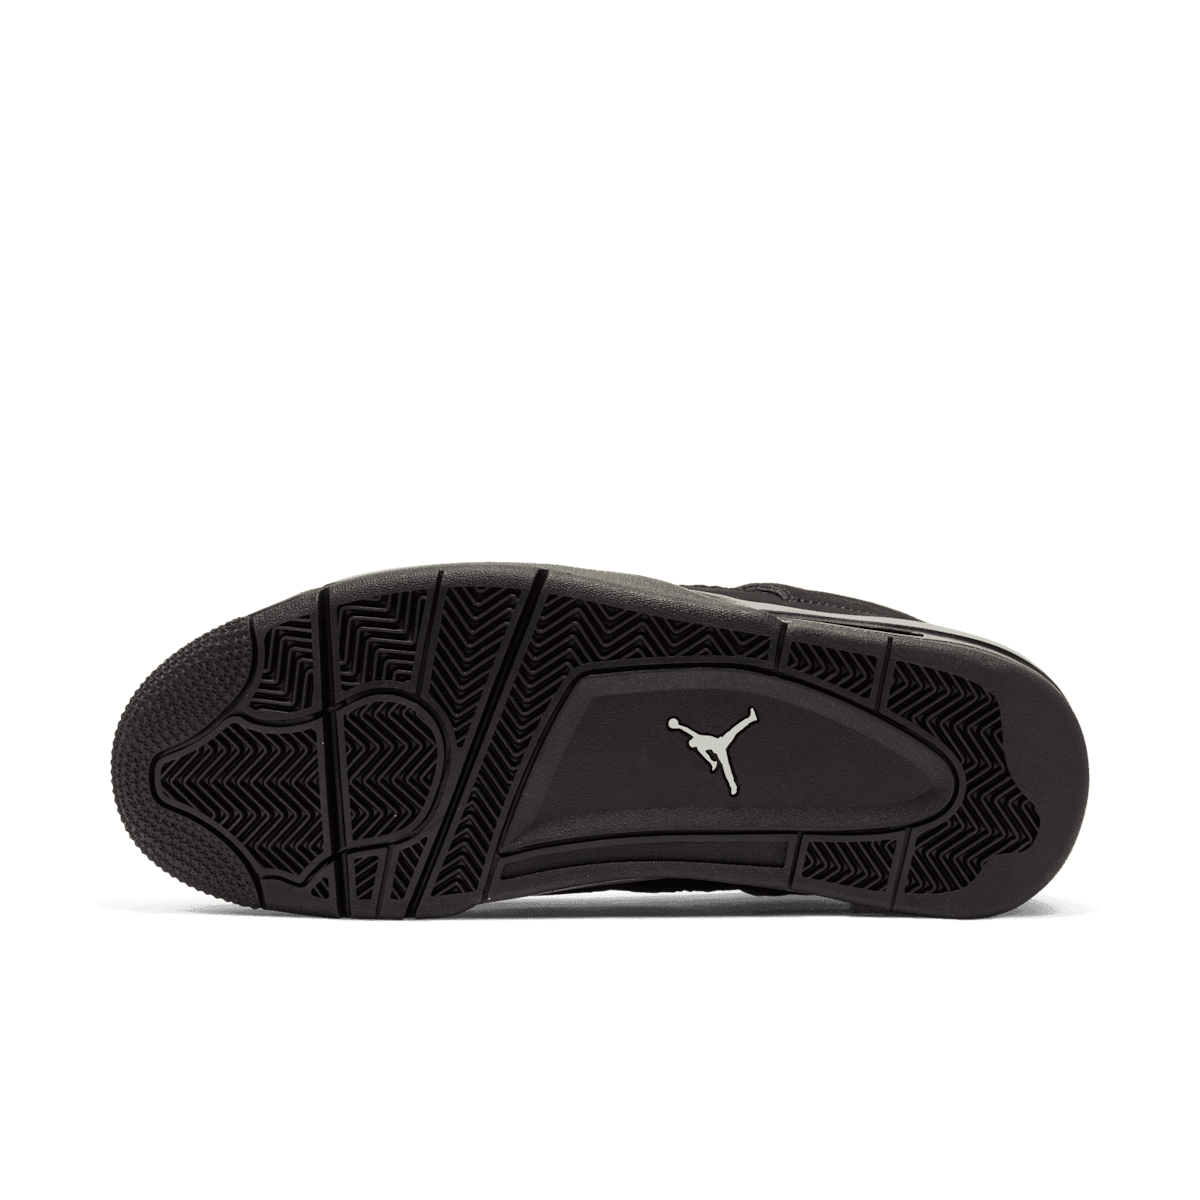 Air Jordan 4 Retro Black Cat (2020) - CU1110-010 Raffles and Release Date